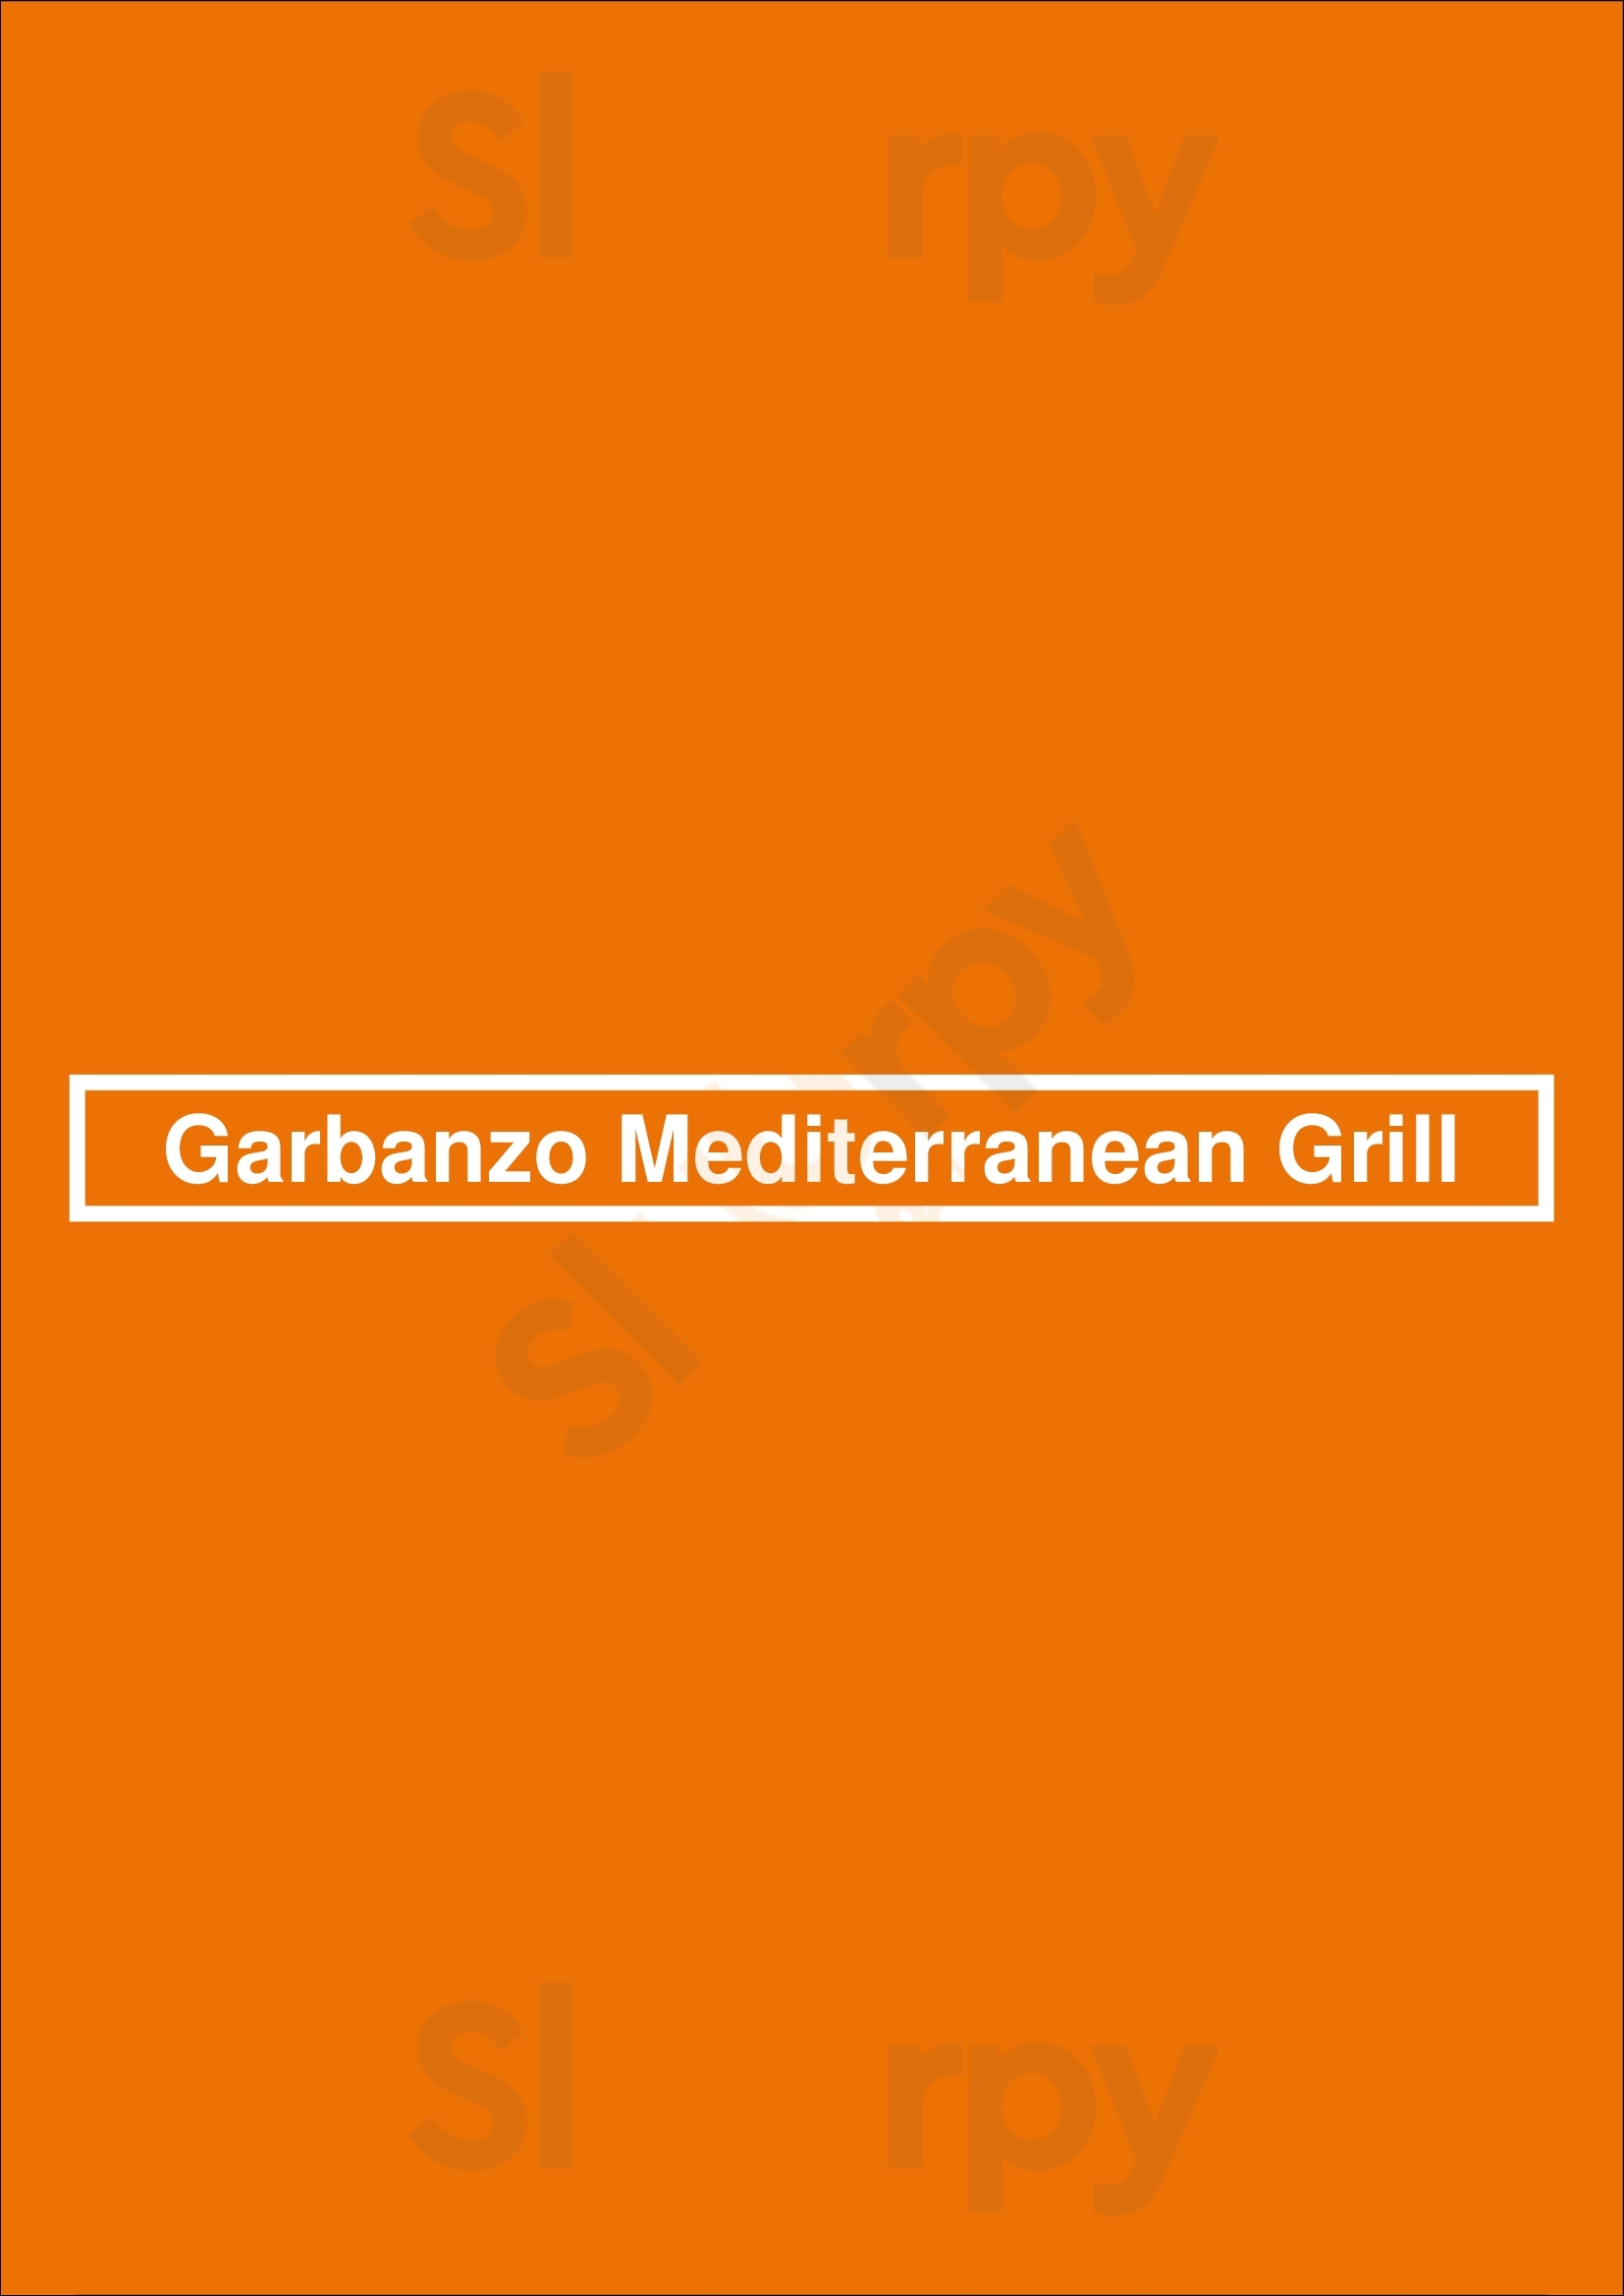 Garbanzo Mediterranean Fresh Fort Collins Menu - 1